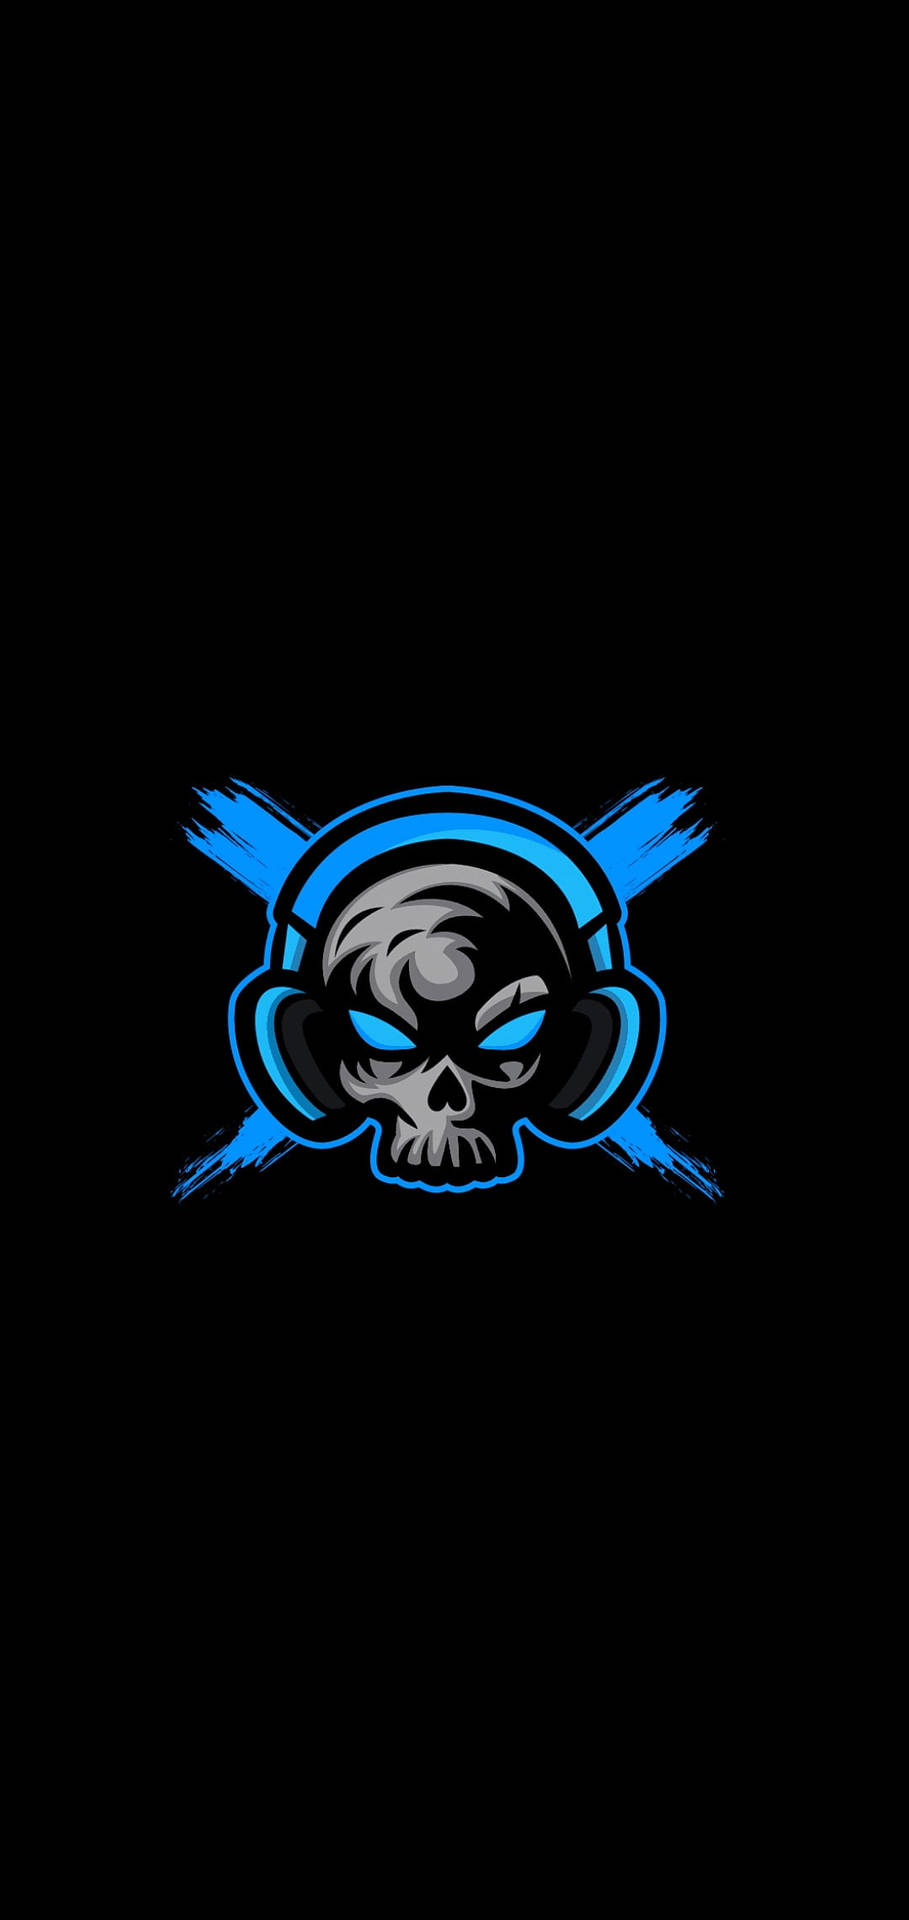 Skull With Headphones Gaming Logo Hd